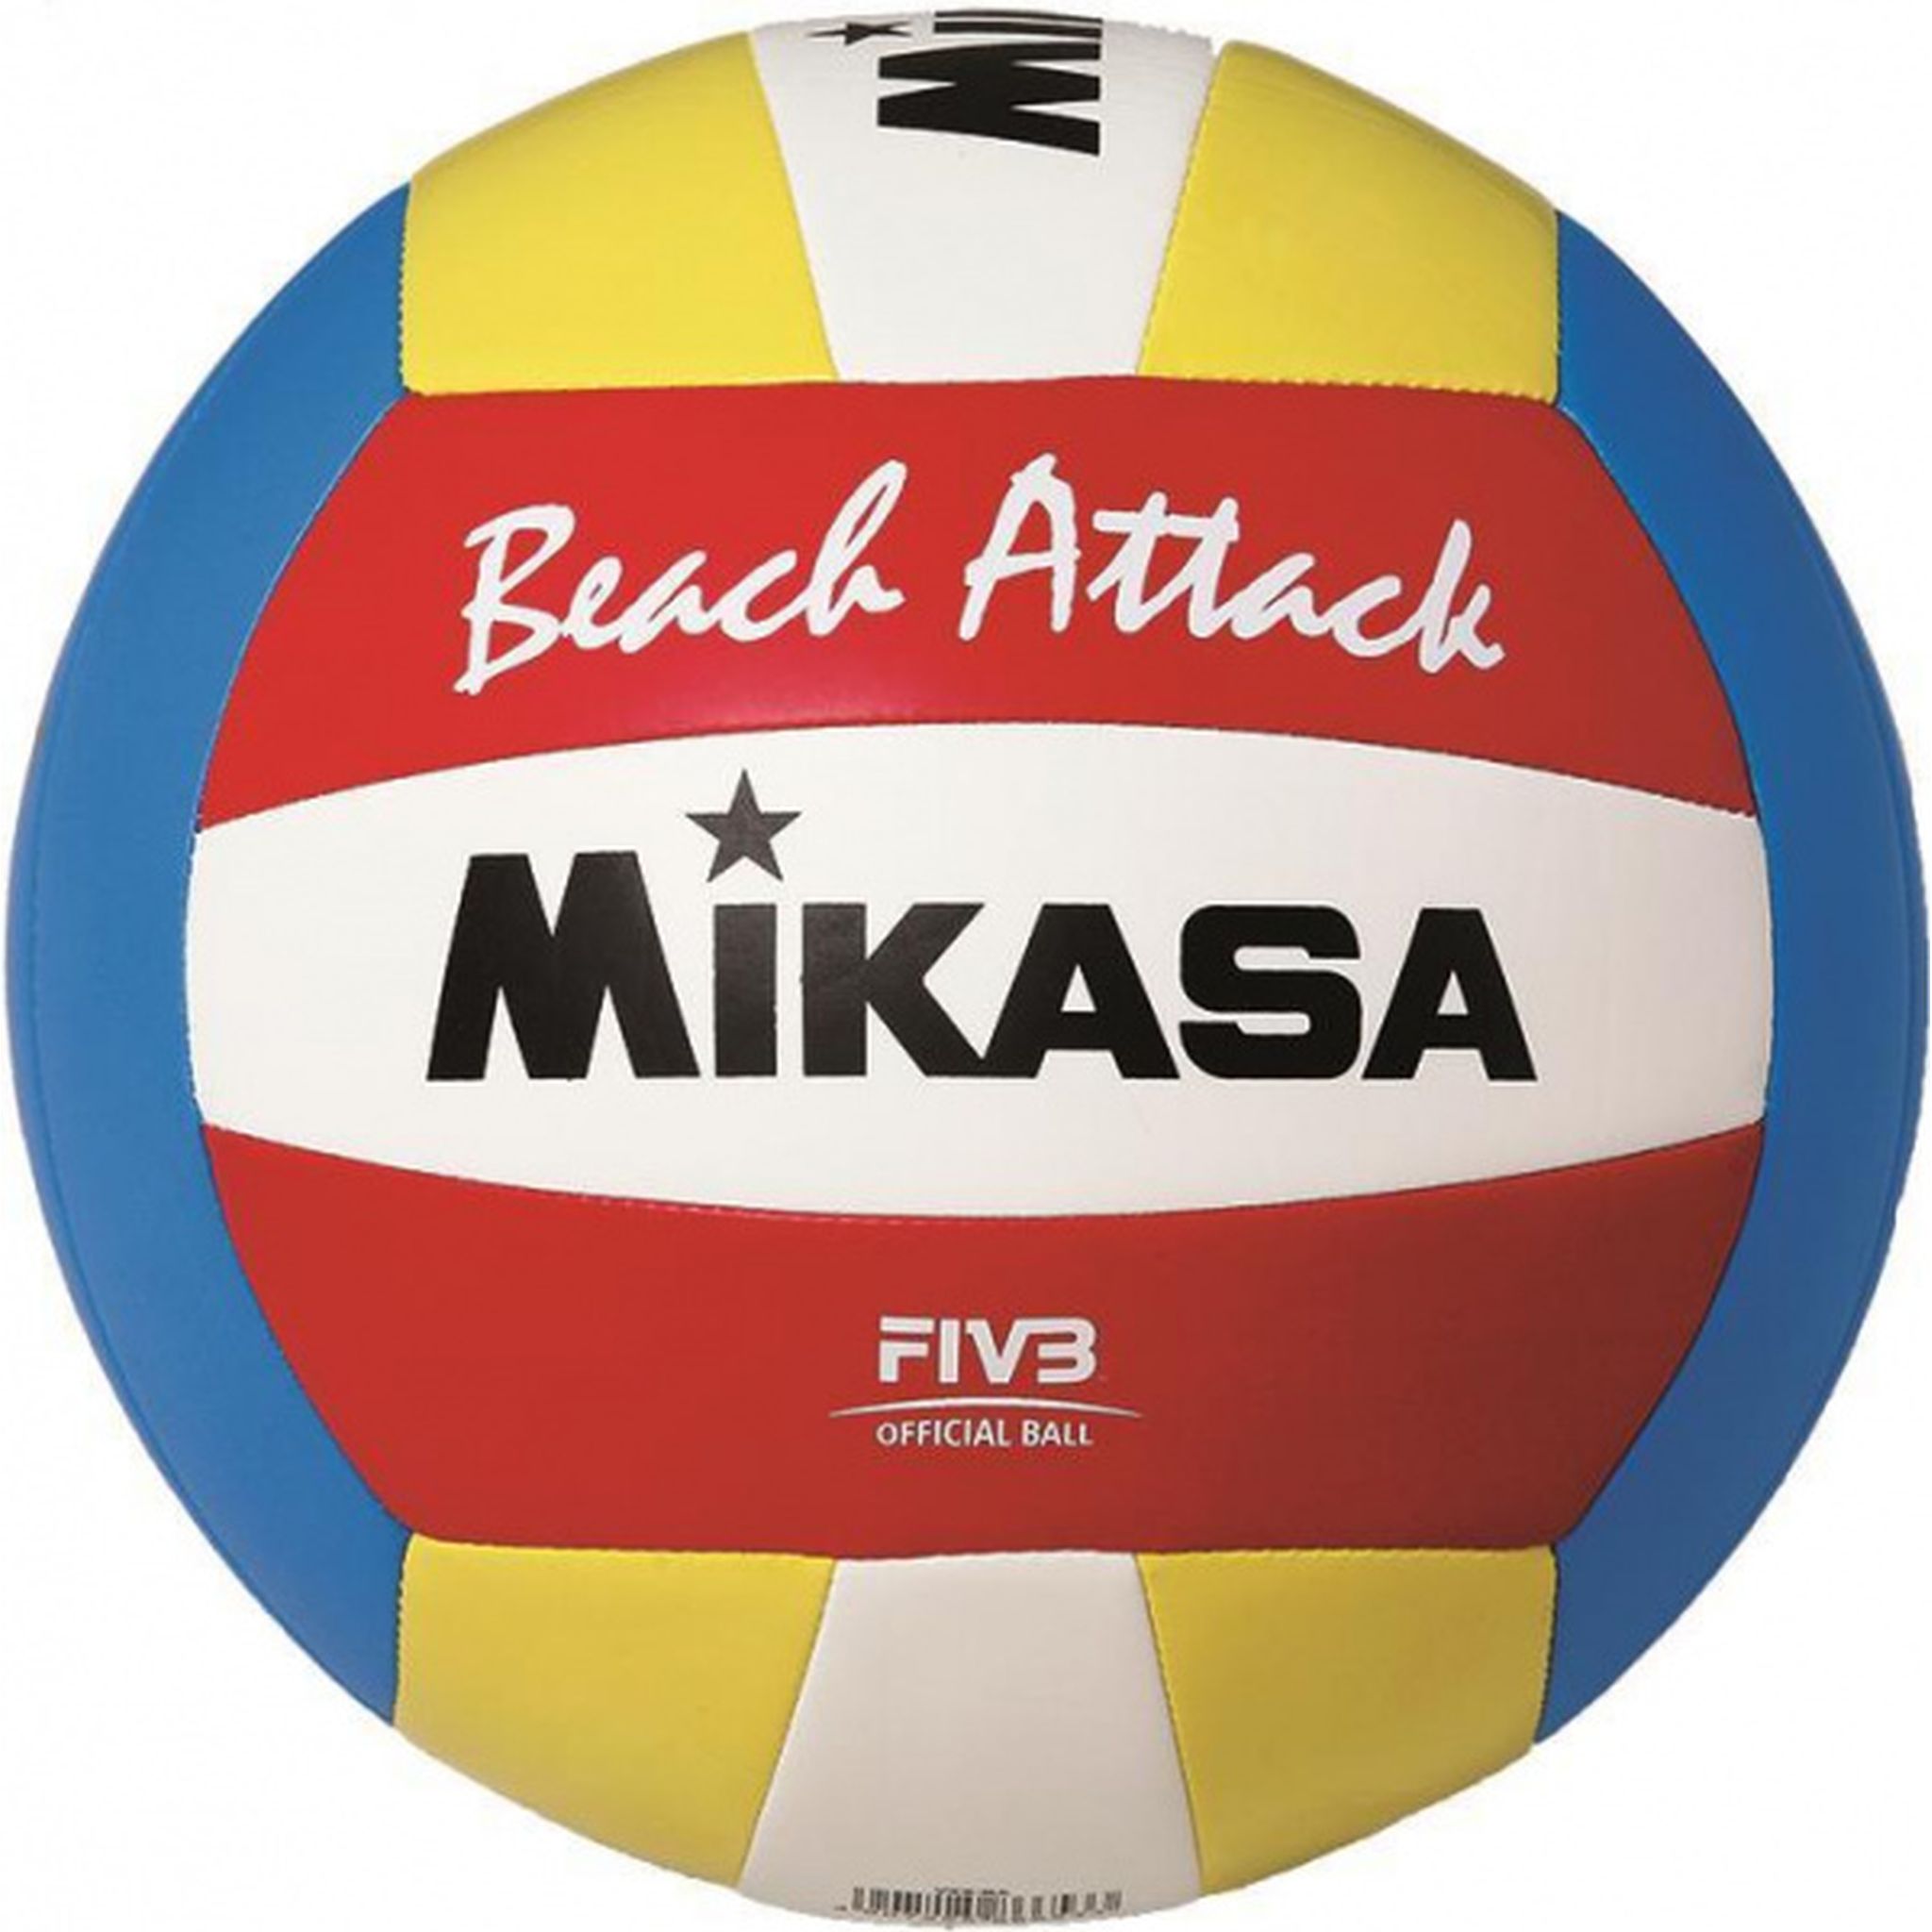 Mikasa VXS Beach Attack Volleyball